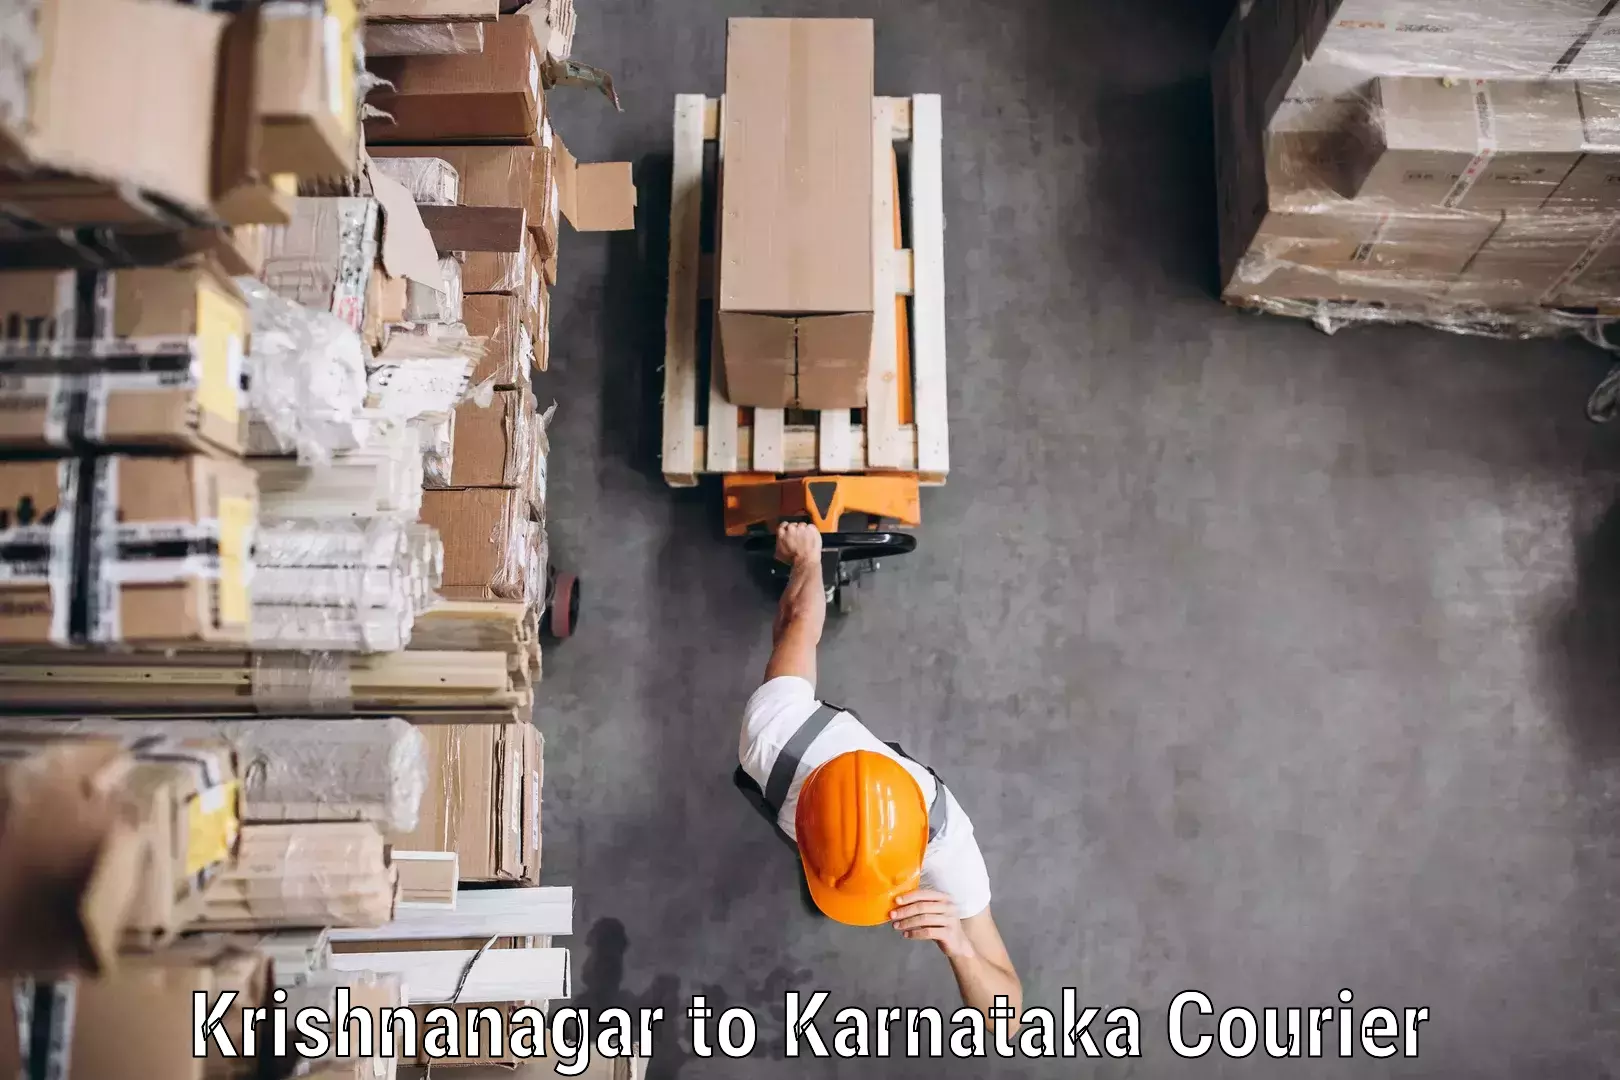 Courier service partnerships in Krishnanagar to Bangarapet